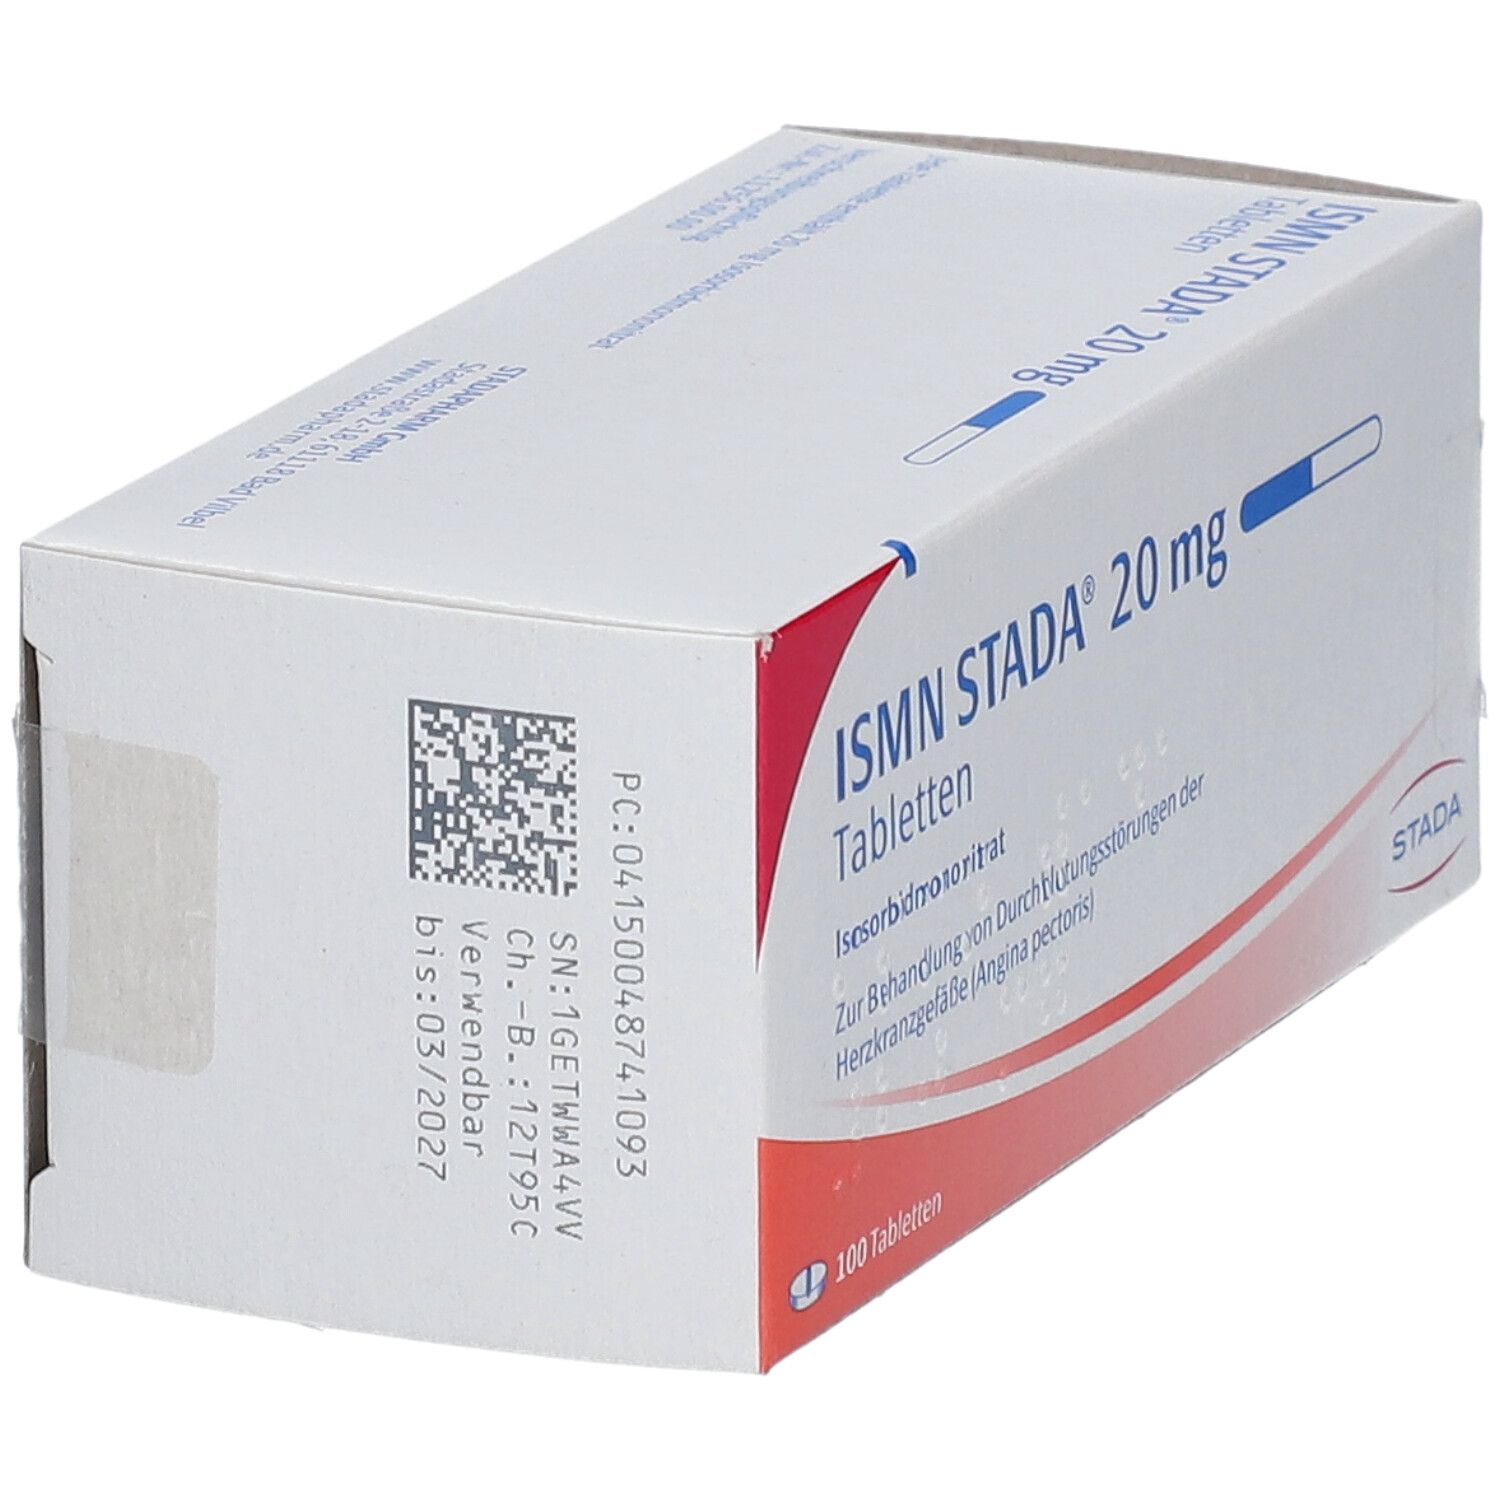 ISMN STADA® 20 mg